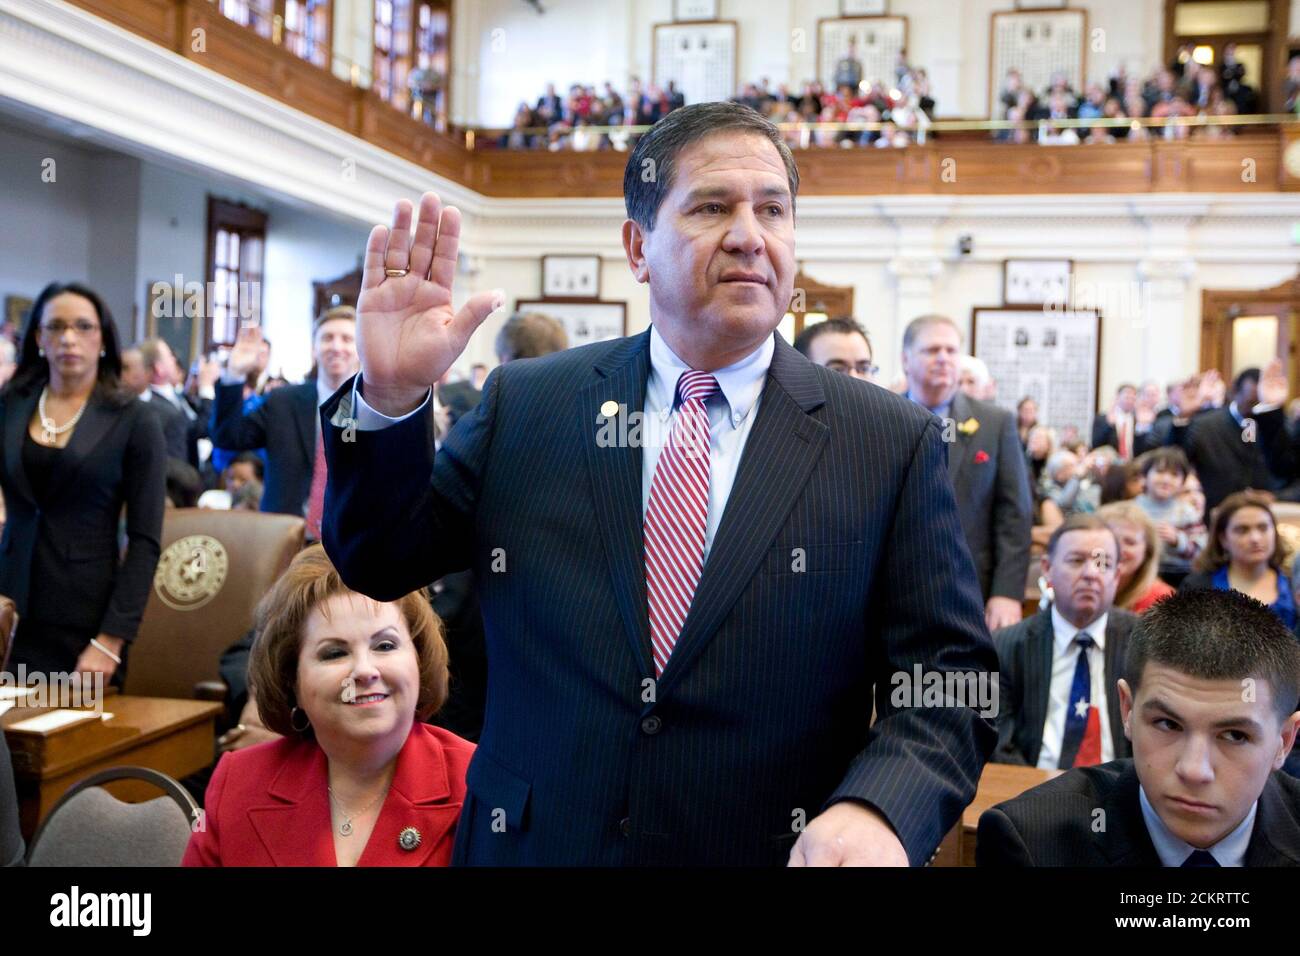 DATEI Austin, TX 13. Januar 2009: Erster Tag der 81. Sitzung der Texas Legislature auf der Etage des Repräsentantenhauses, während der Repräsentant Kino Flores (D-Edinburg) den Amtseid ablegt. ©Bob Daemmrich Stockfoto